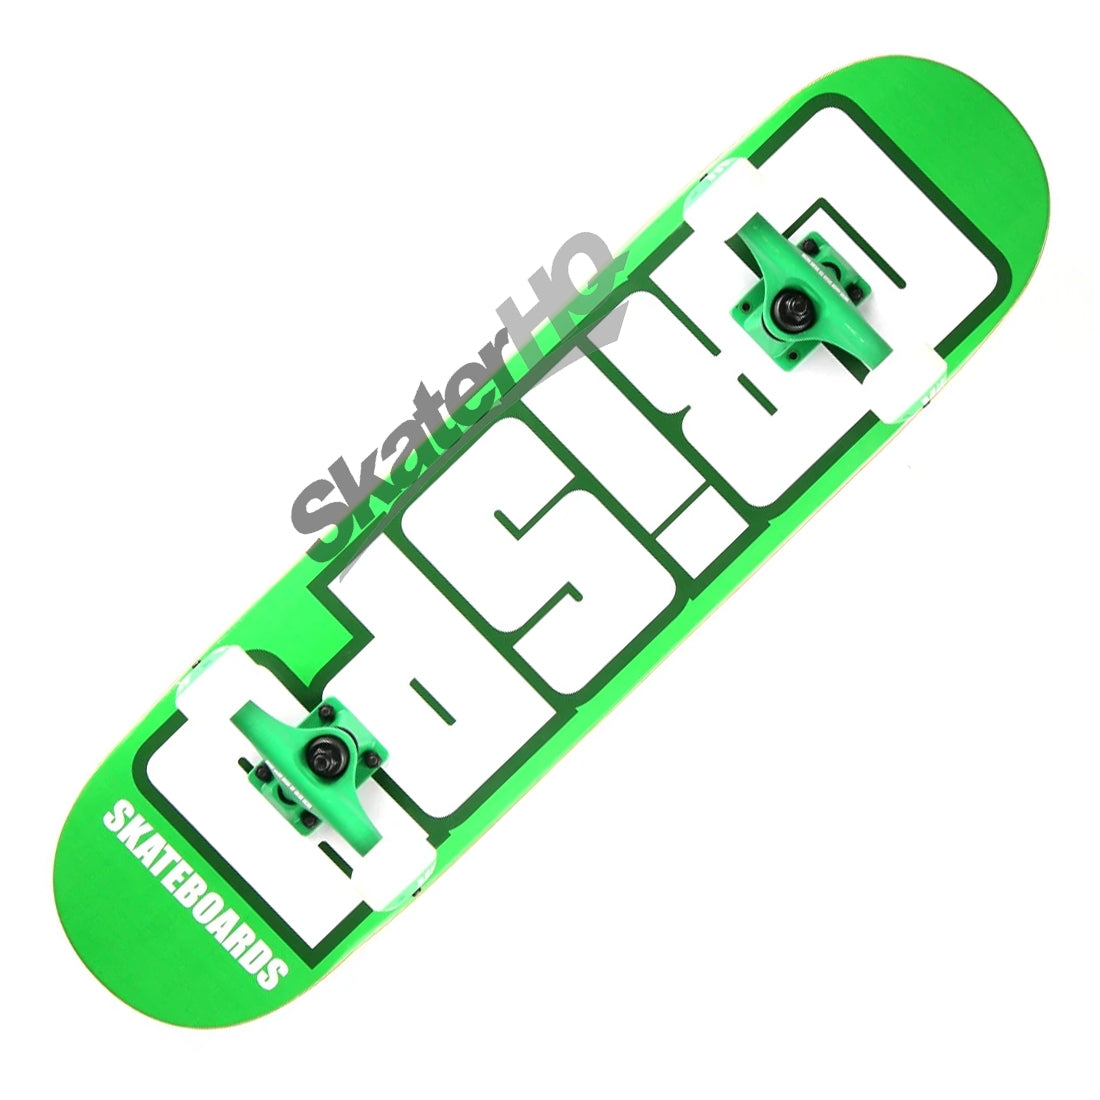 Crispy Advanced 7.75 Complete - Green/White Skateboard Completes Modern Street